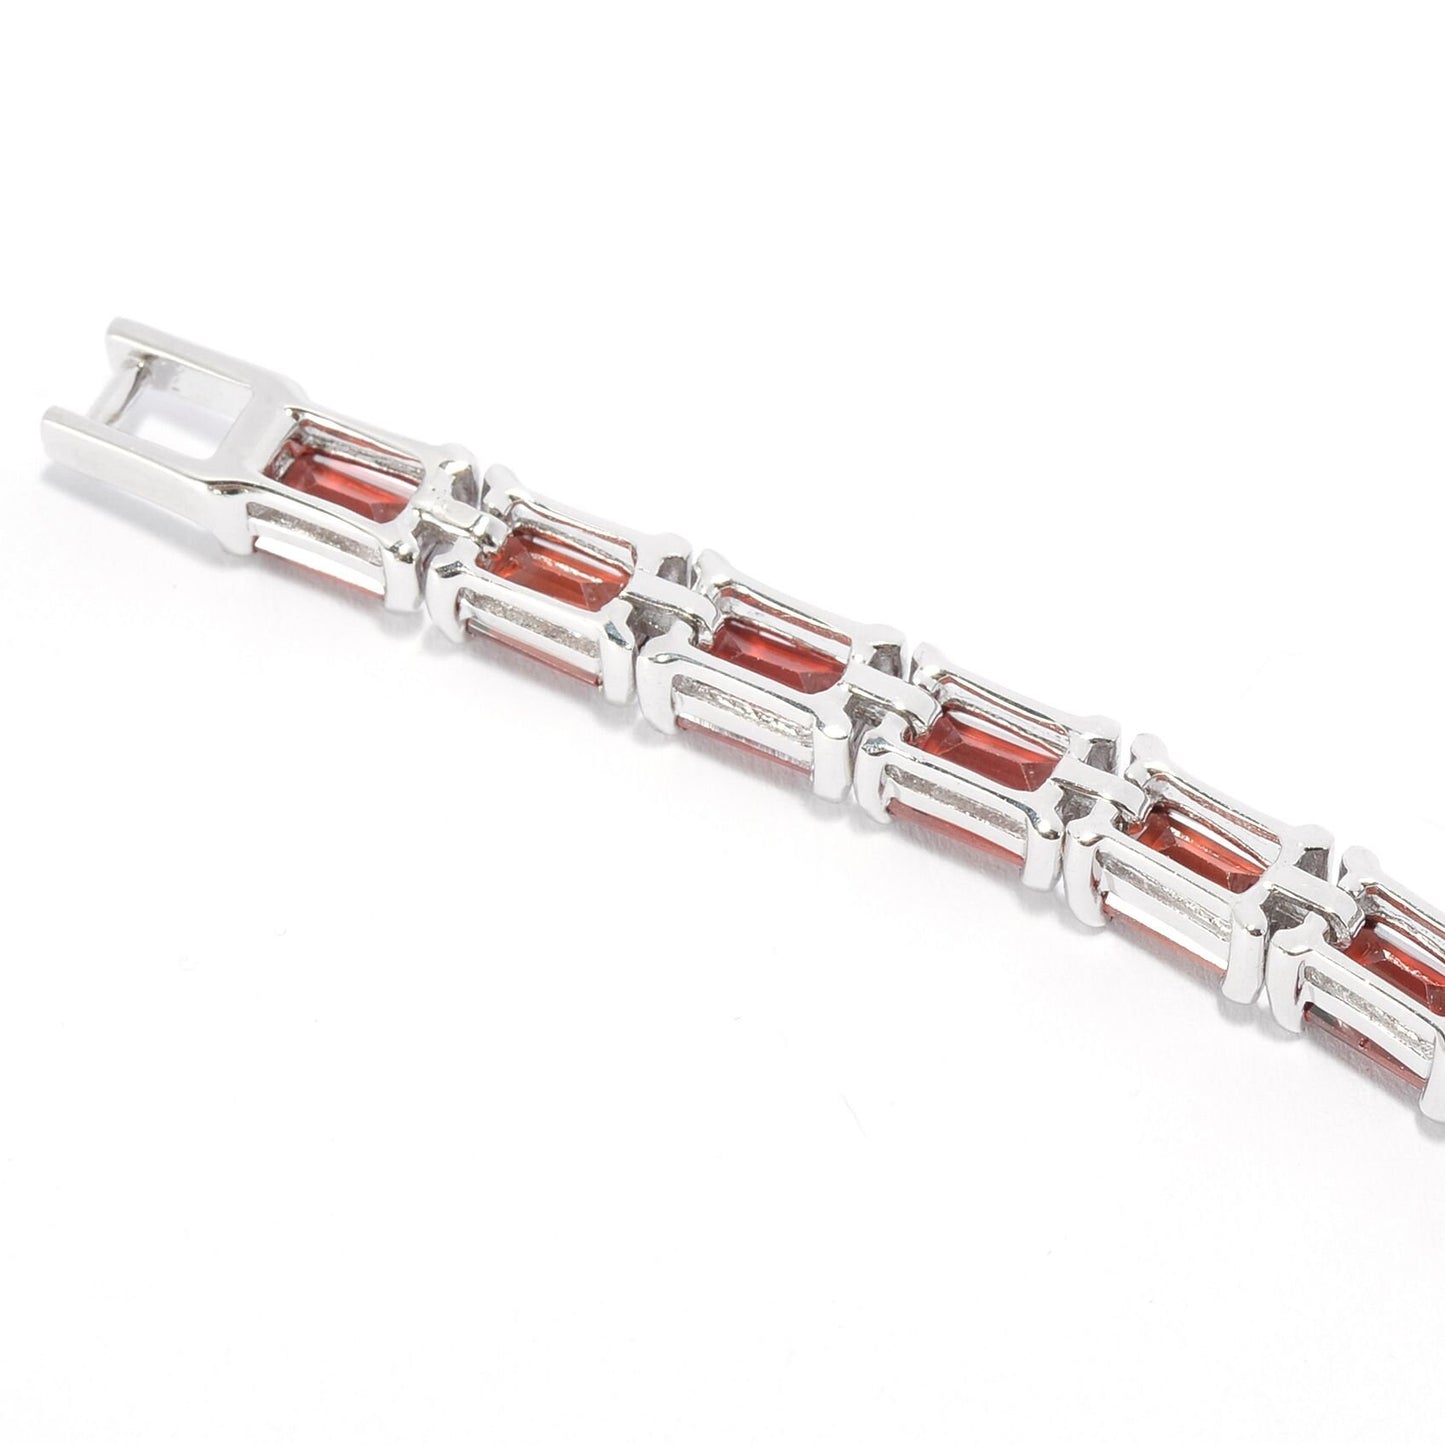 925 Sterling Silver Bracelet, Bridesmaid Bracelet, Natural Red Bracelet, Tennis Bracelet, Anniversary Gift, Gift For Her